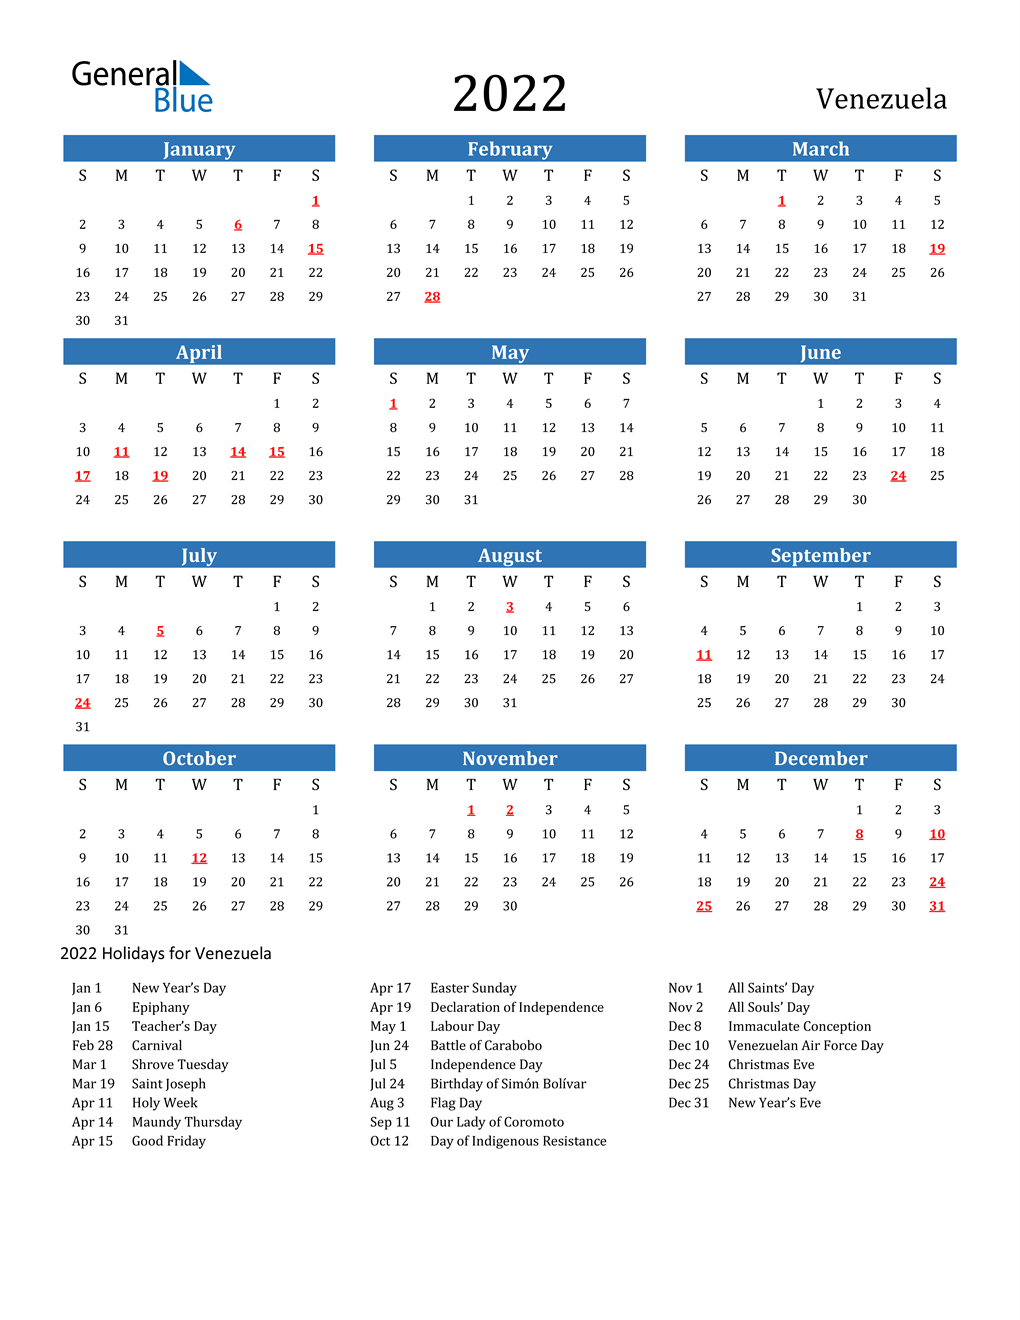 Get 2022 March Madness Calendar